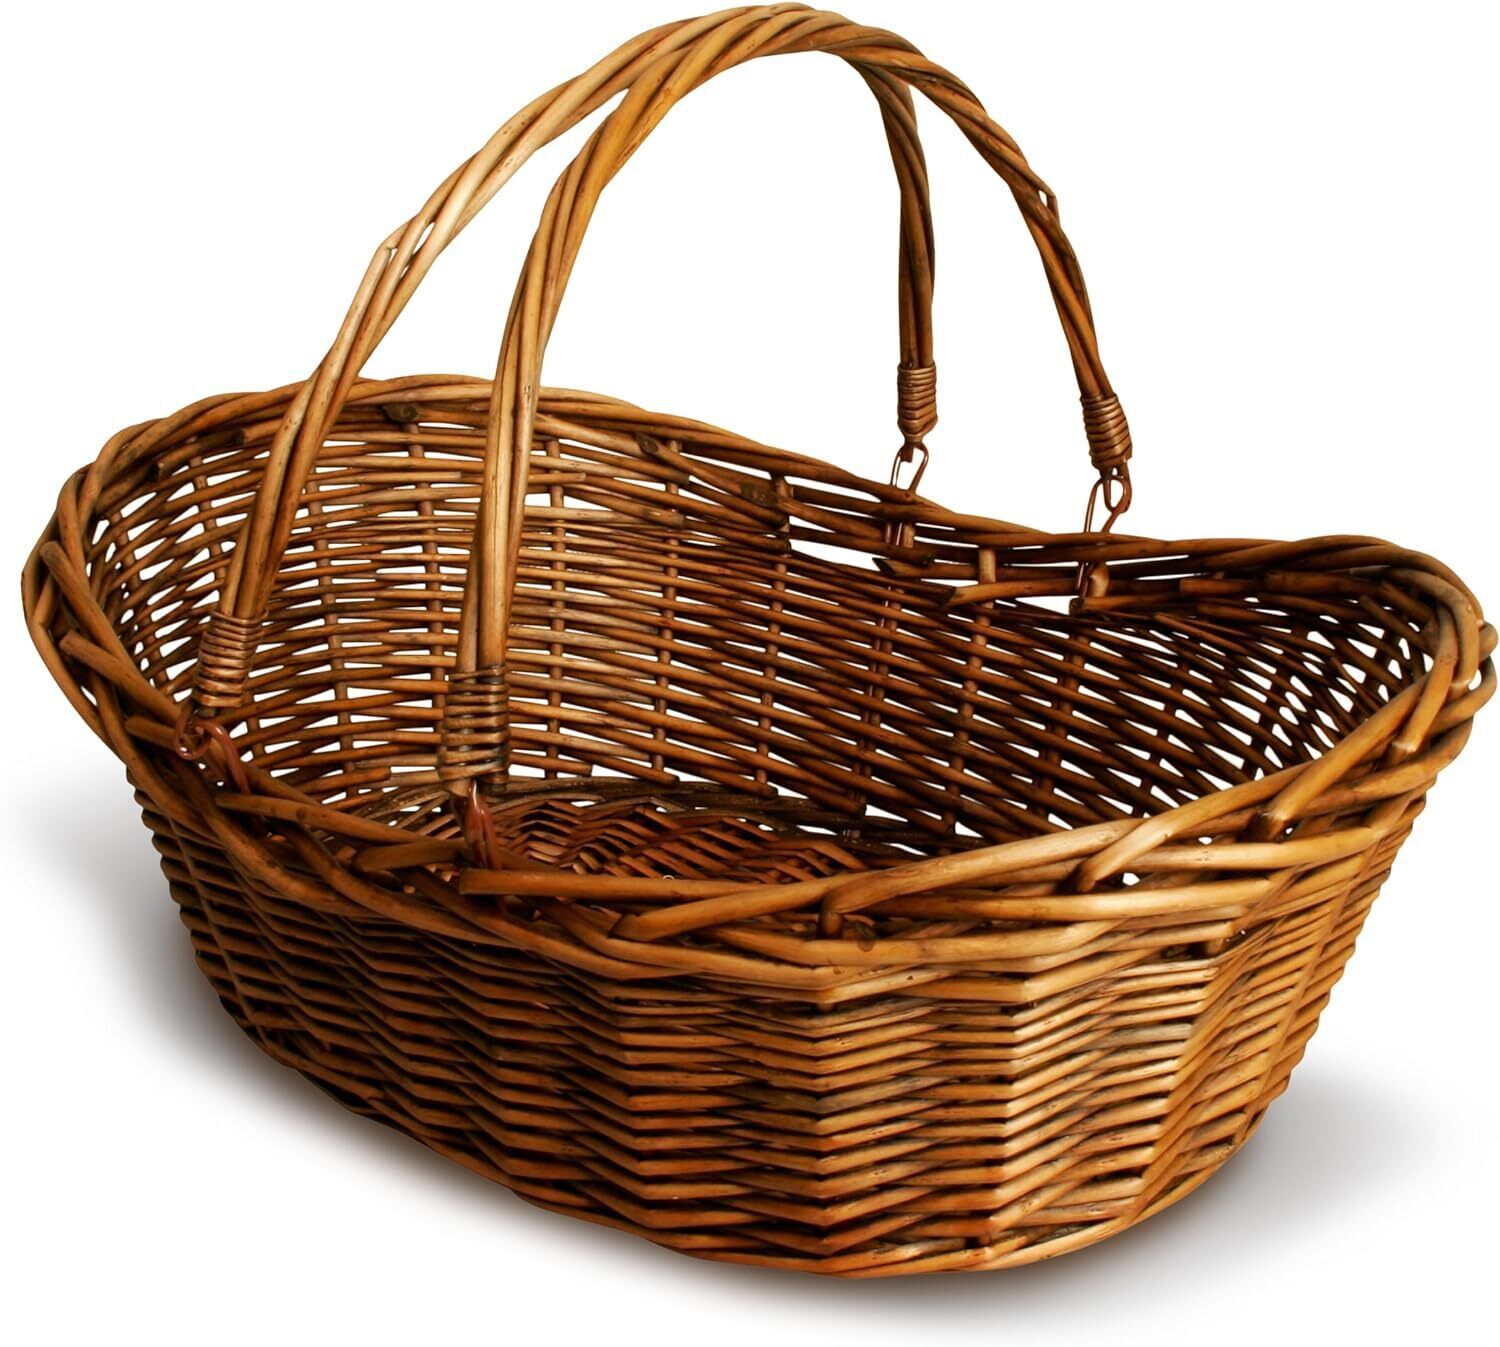  Small Wicker Basket with Handle - Dark Brown Hand Woven Harvest Basket